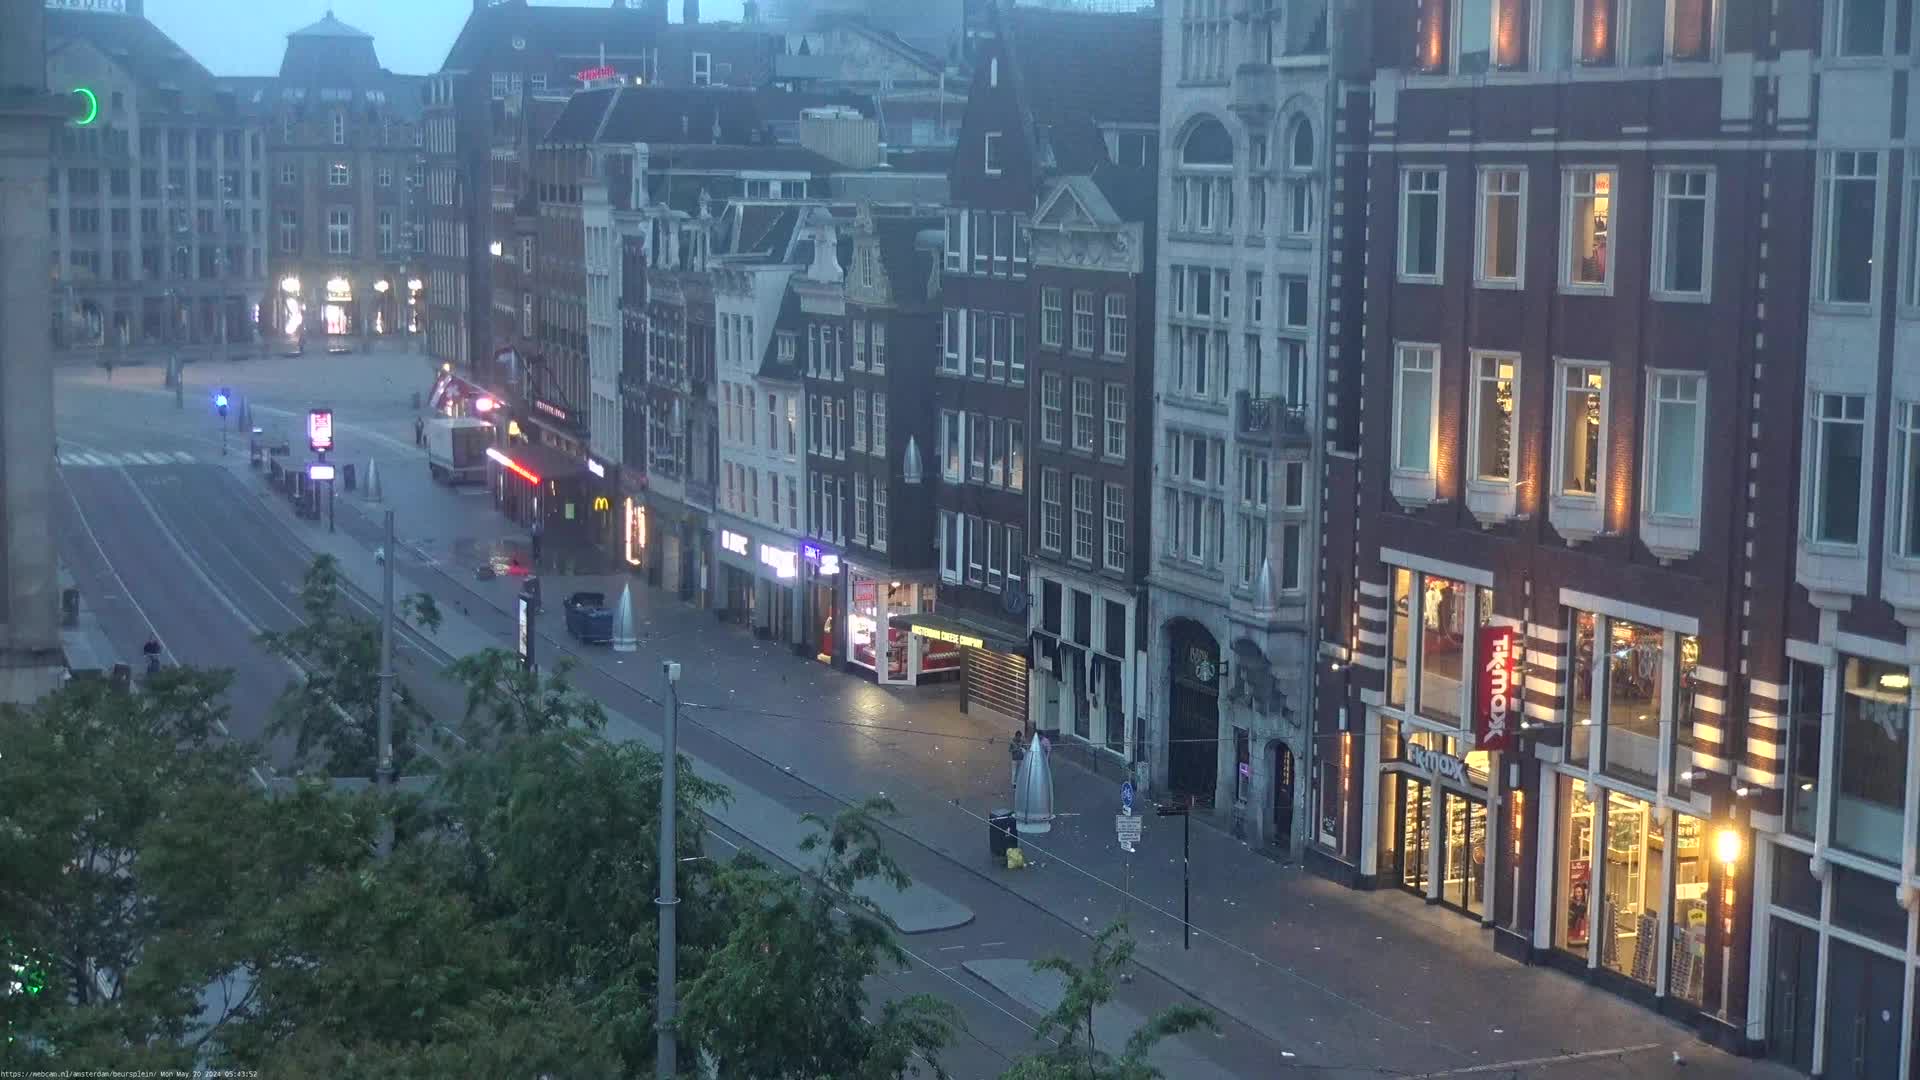 Amsterdam Dom. 06:03